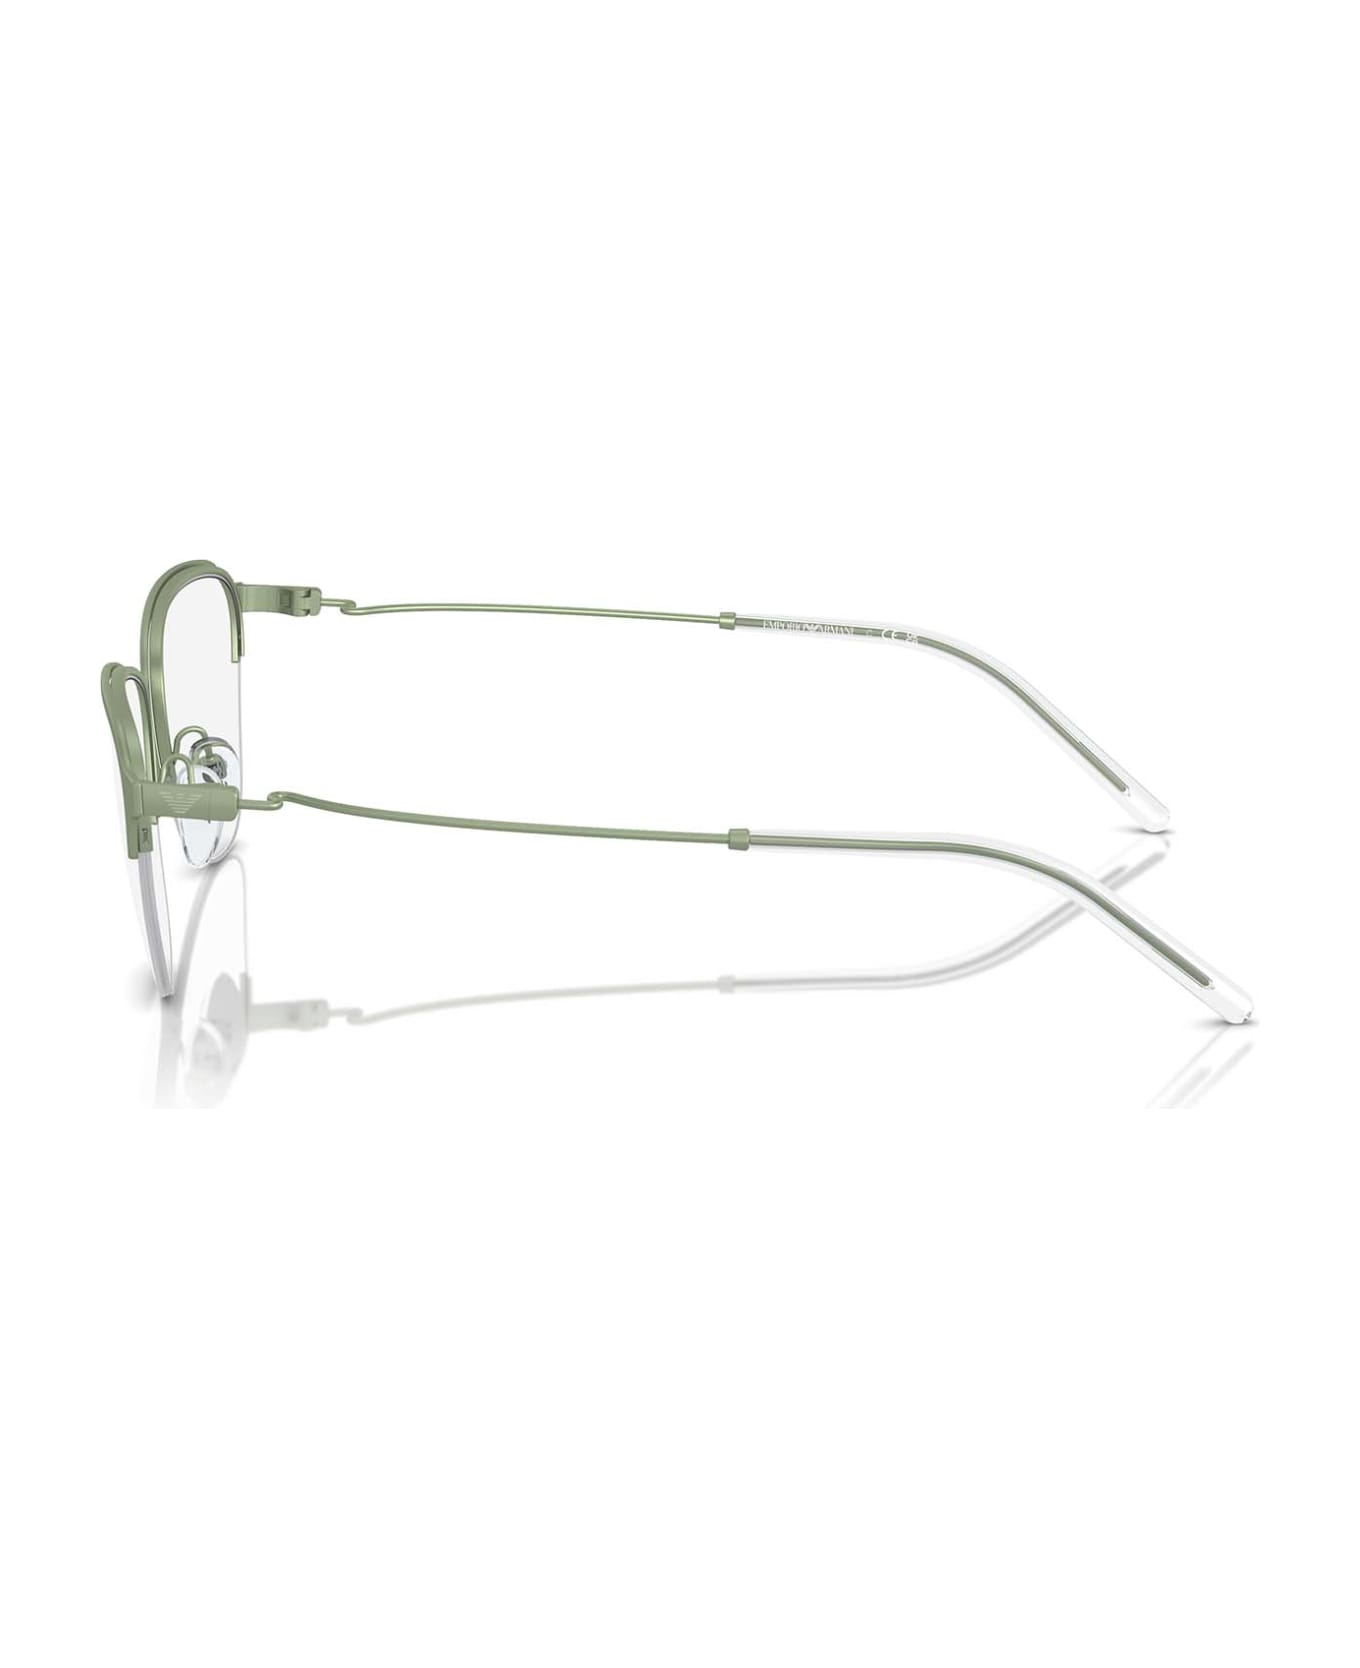 Emporio Armani Ea1161 Metal Green Glasses - Metal Green アイウェア